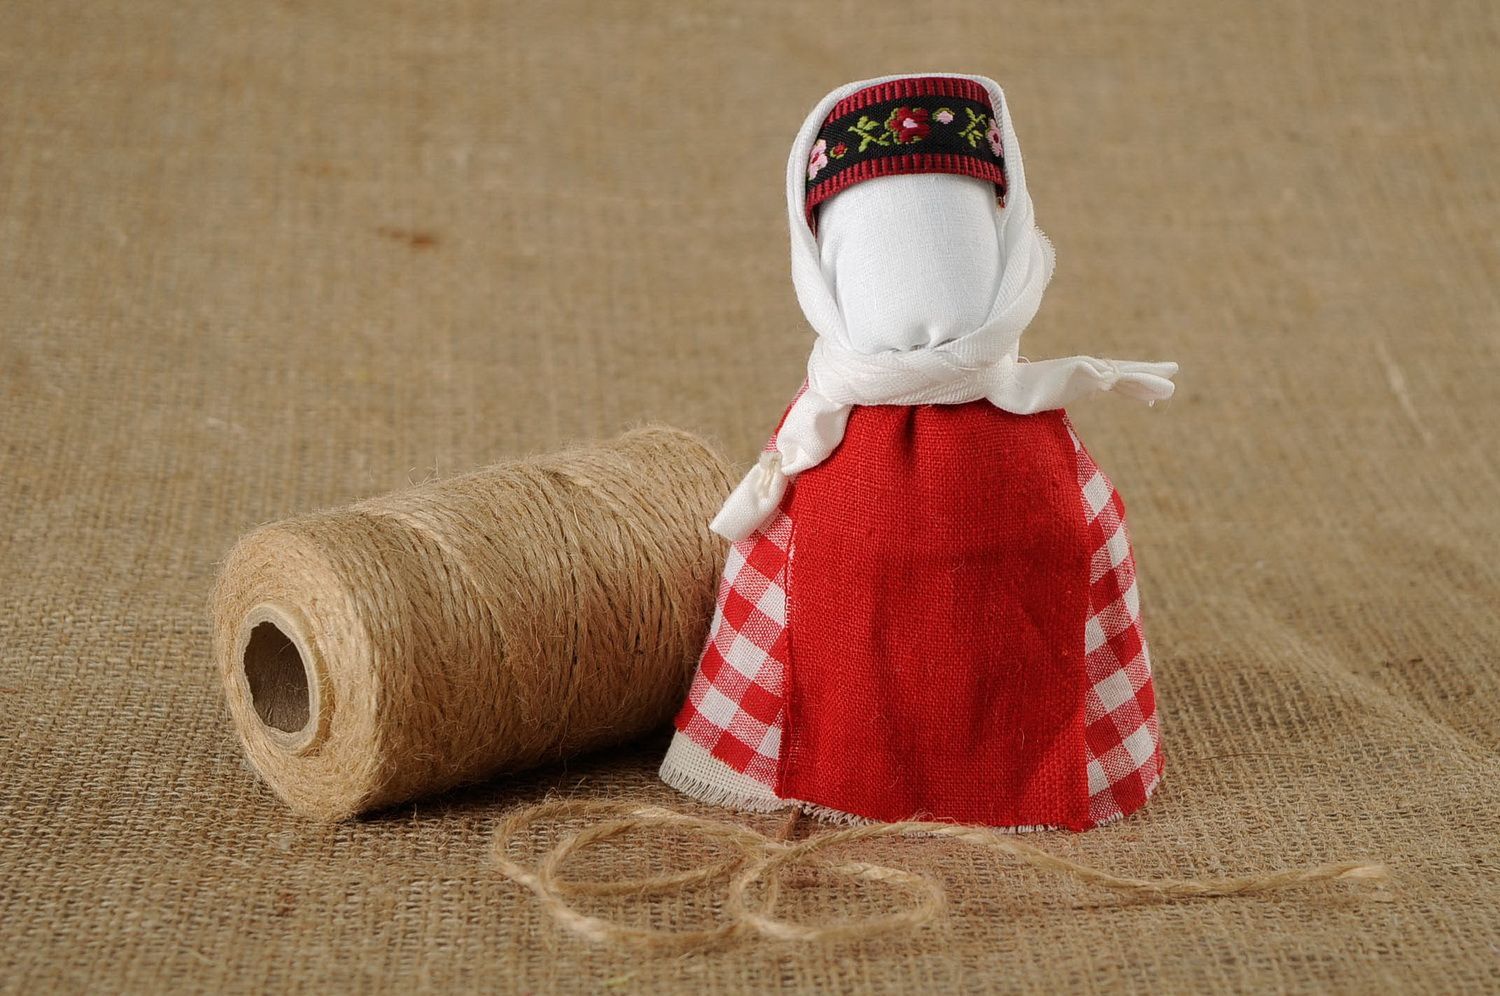 Motanka doll made of cotton photo 1